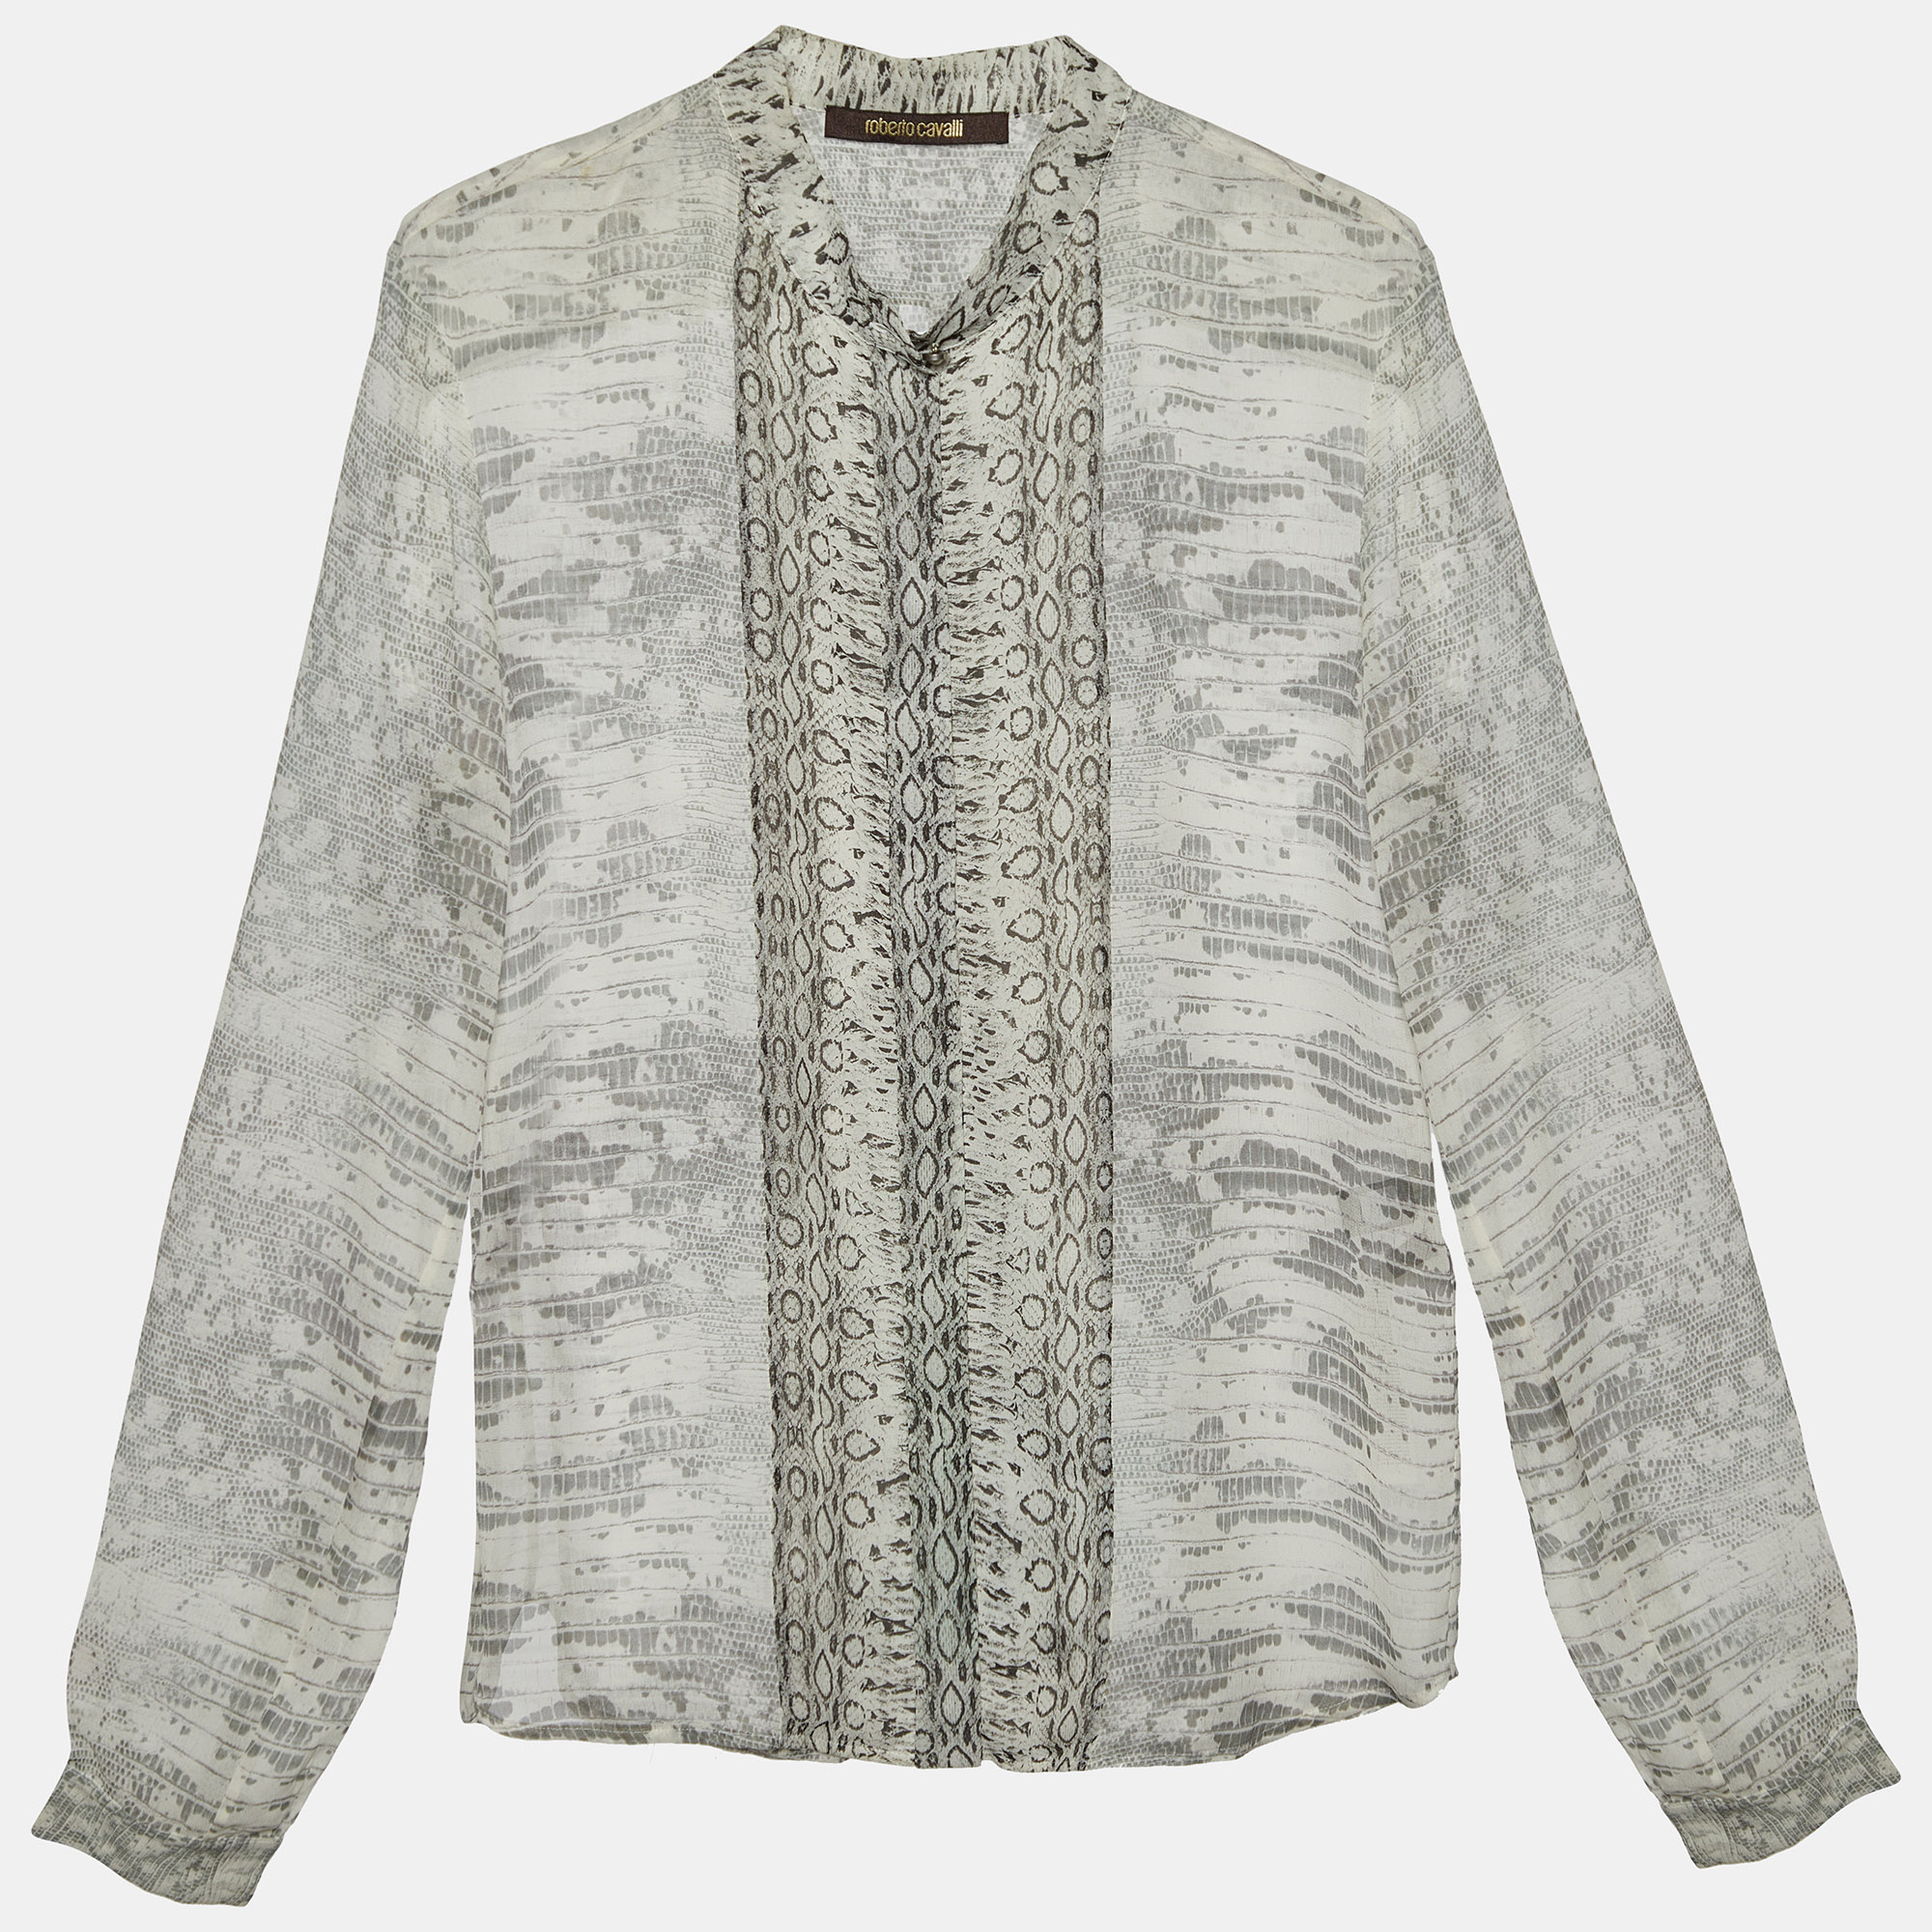 Roberto cavalli light grey snakeskin printed silk button front shirt s